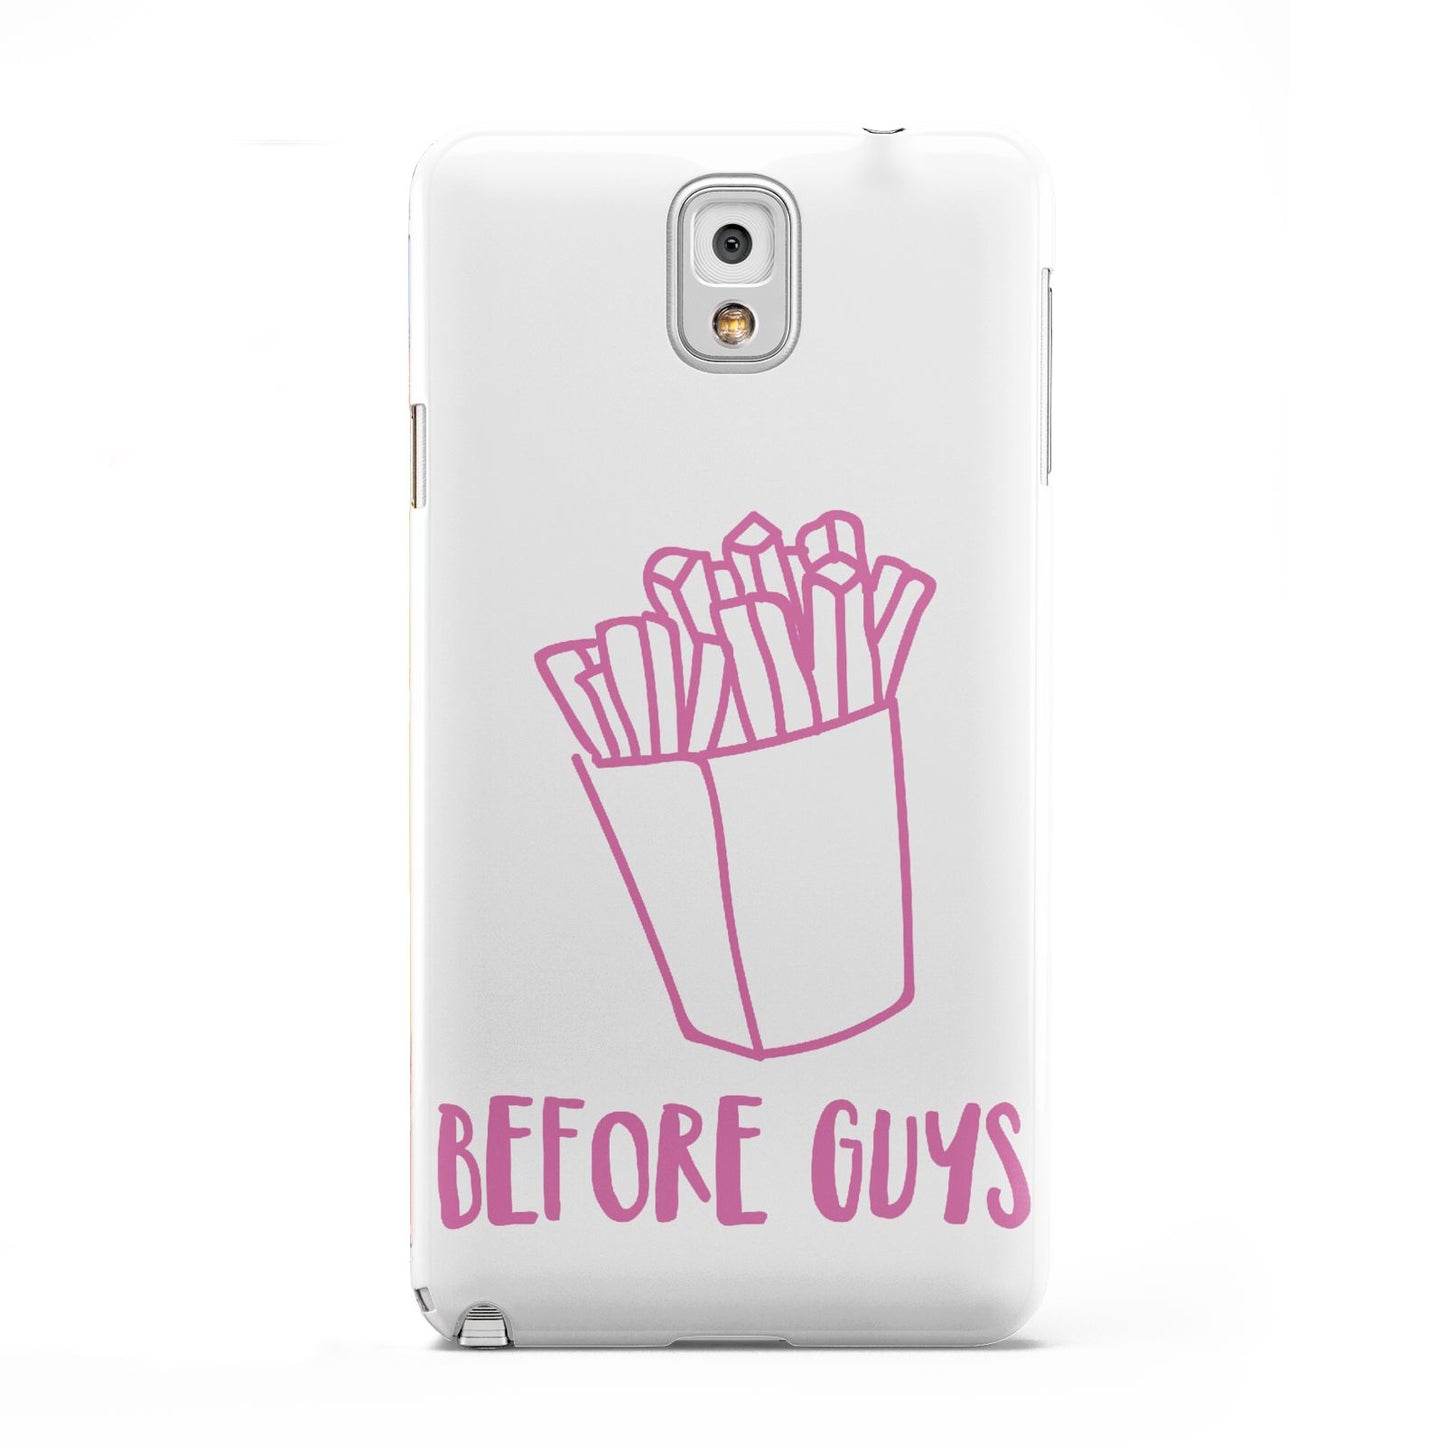 Valentines Fries Before Guys Samsung Galaxy Note 3 Case